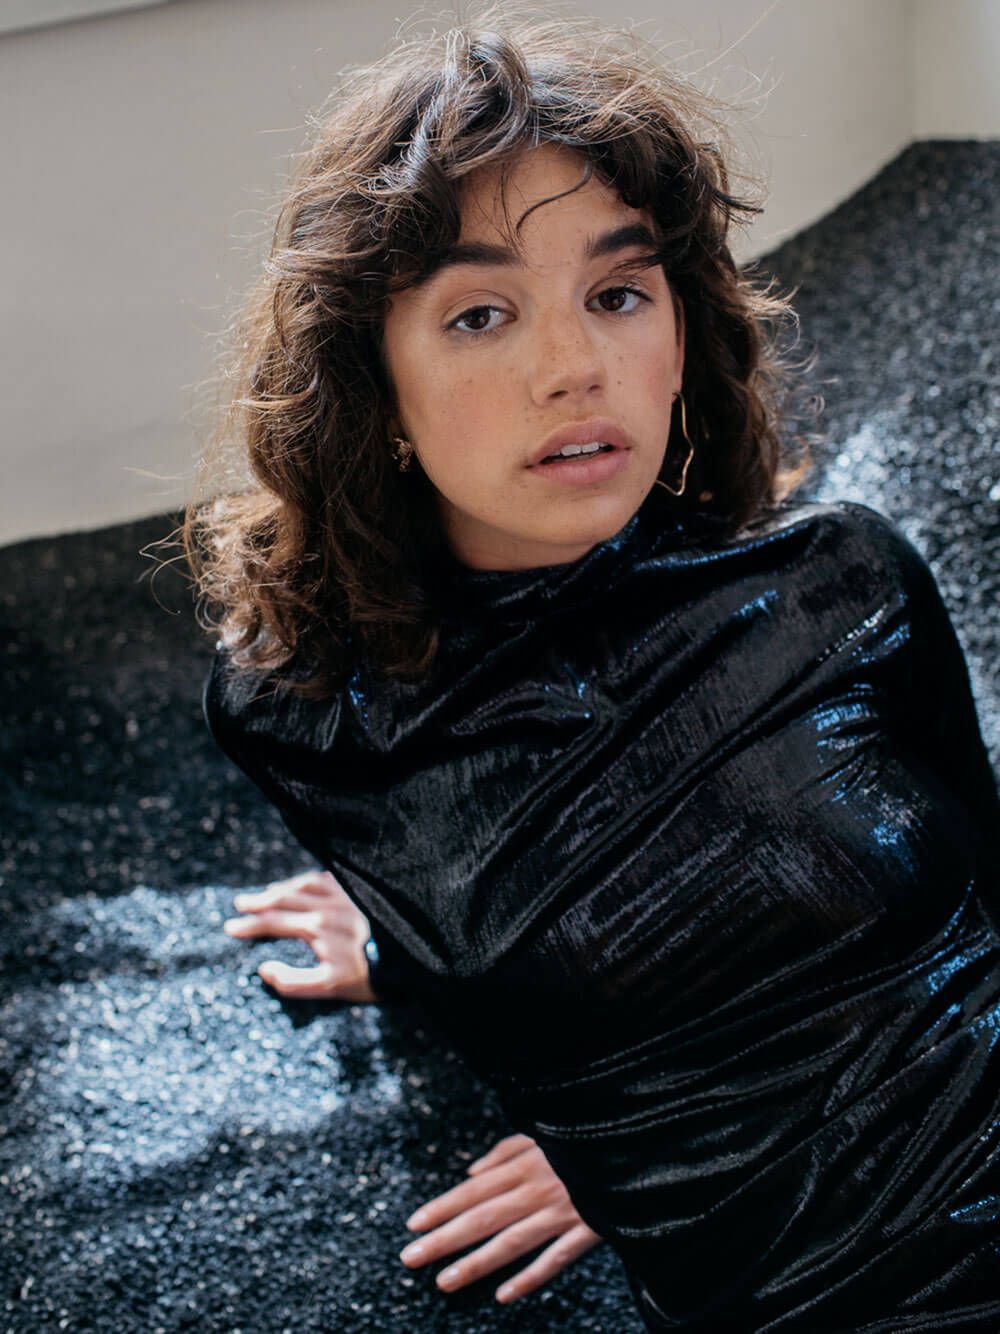 Black Venus Midi Dress | Carolina Machado 